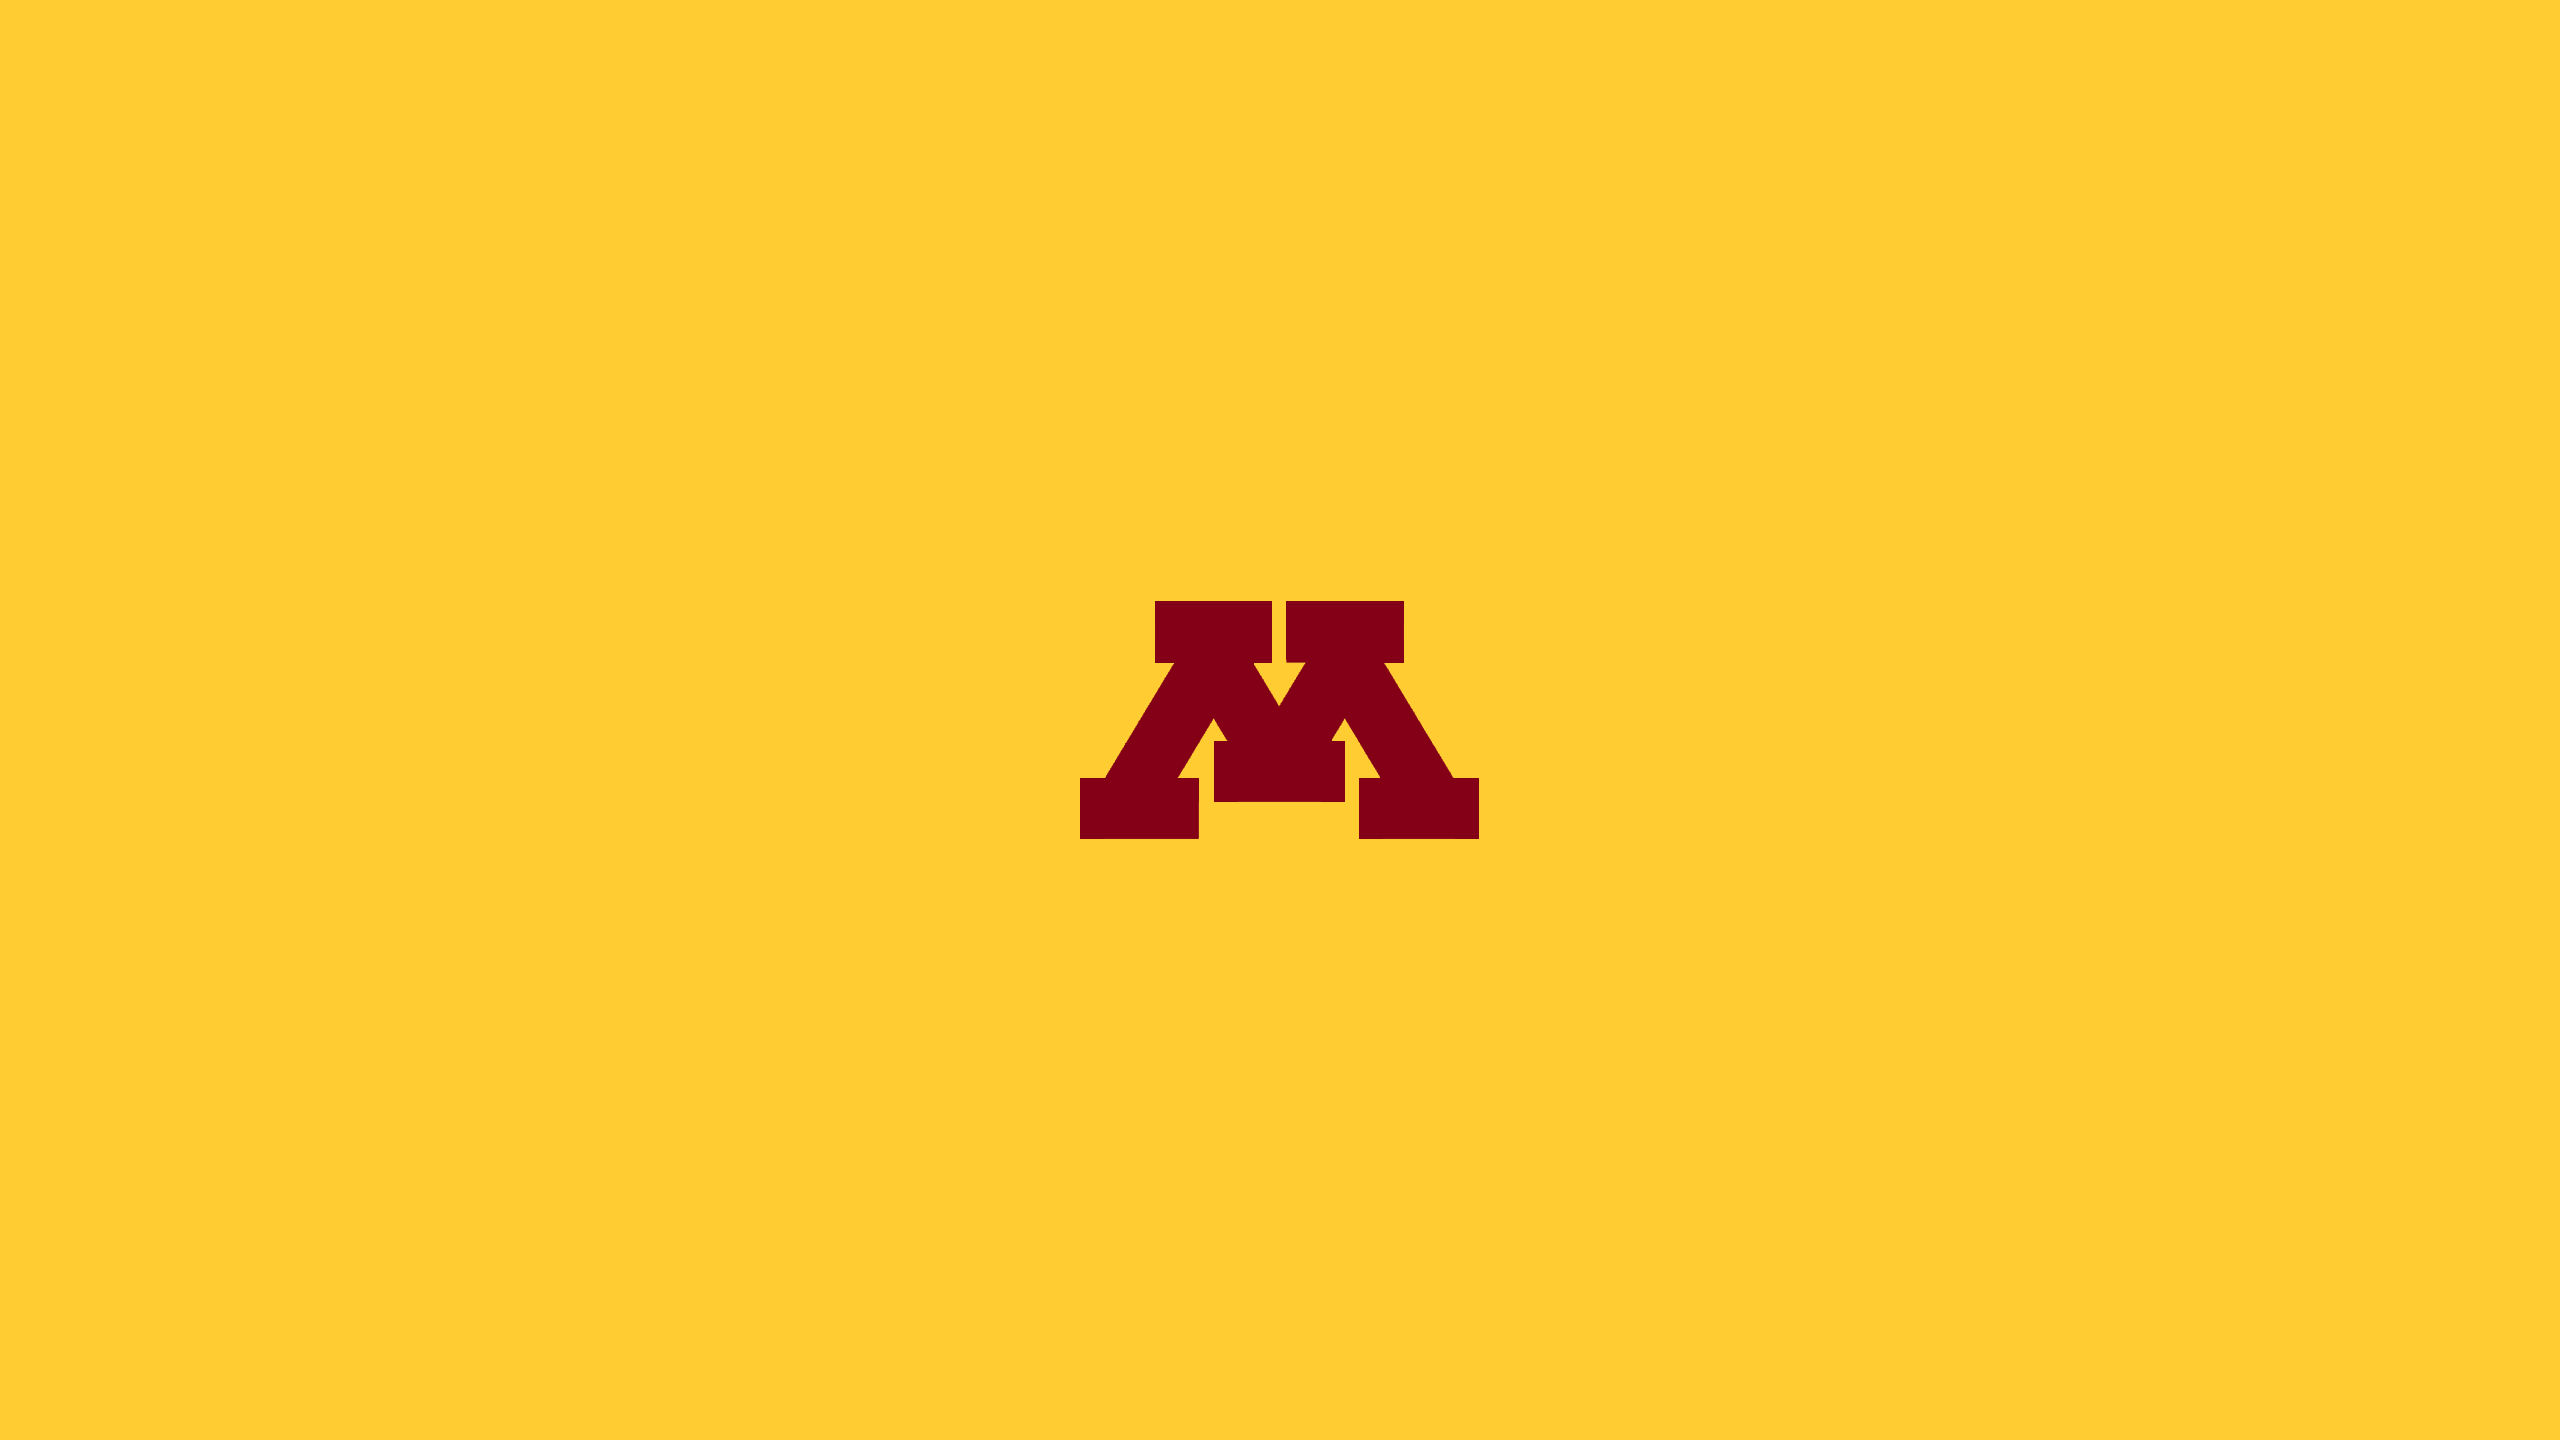 Minnesota Golden Gophers Football - NCAAF - Square Bettor